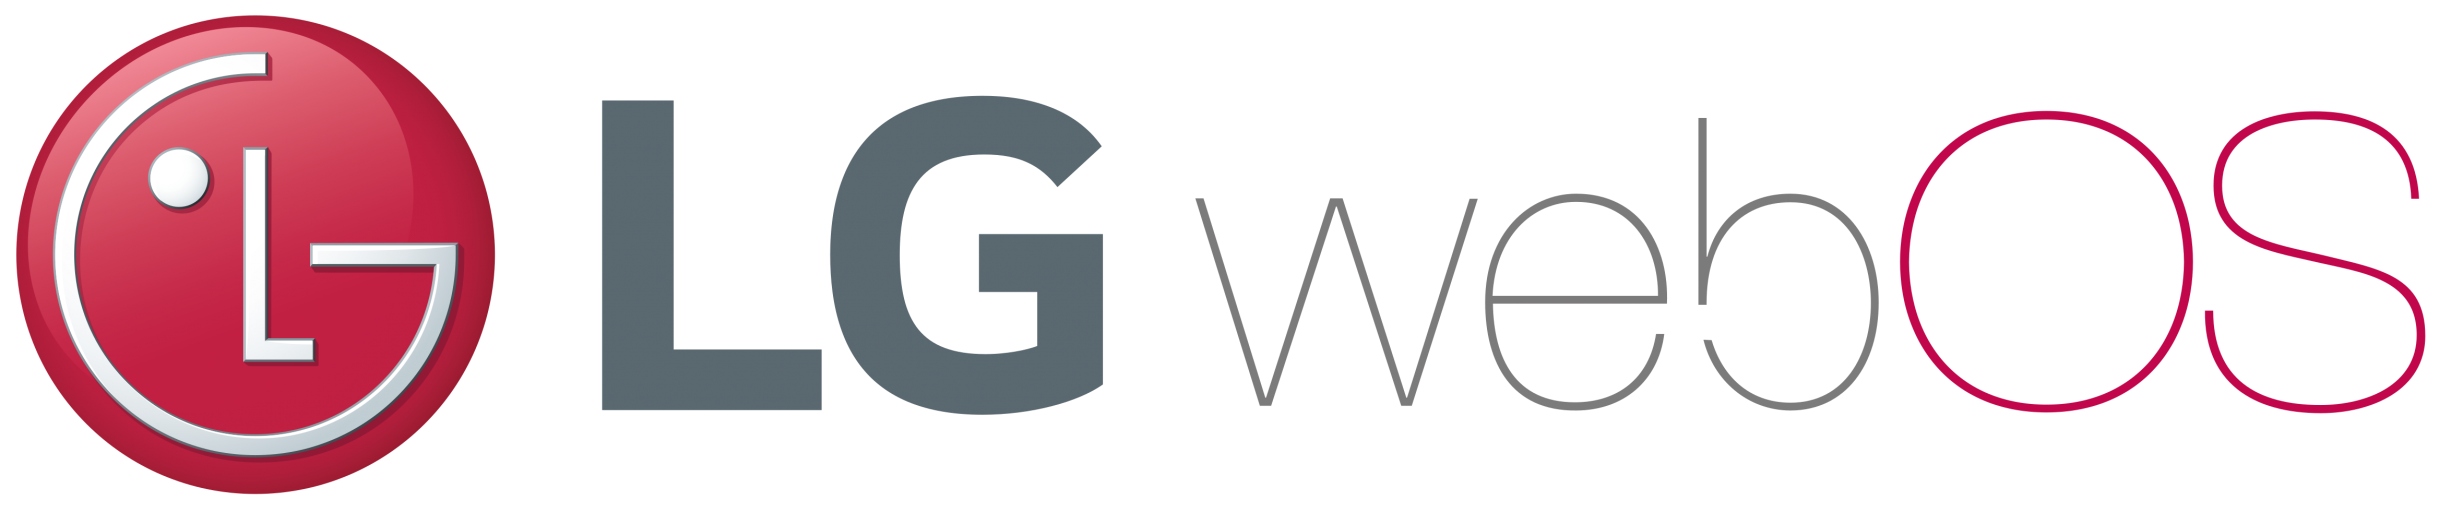 WEBOS логотип. Логотип LG смарт ТВ. LG Smart TV прозрачный логотип. LG телевизоры лого. Lg телевизоры логотип